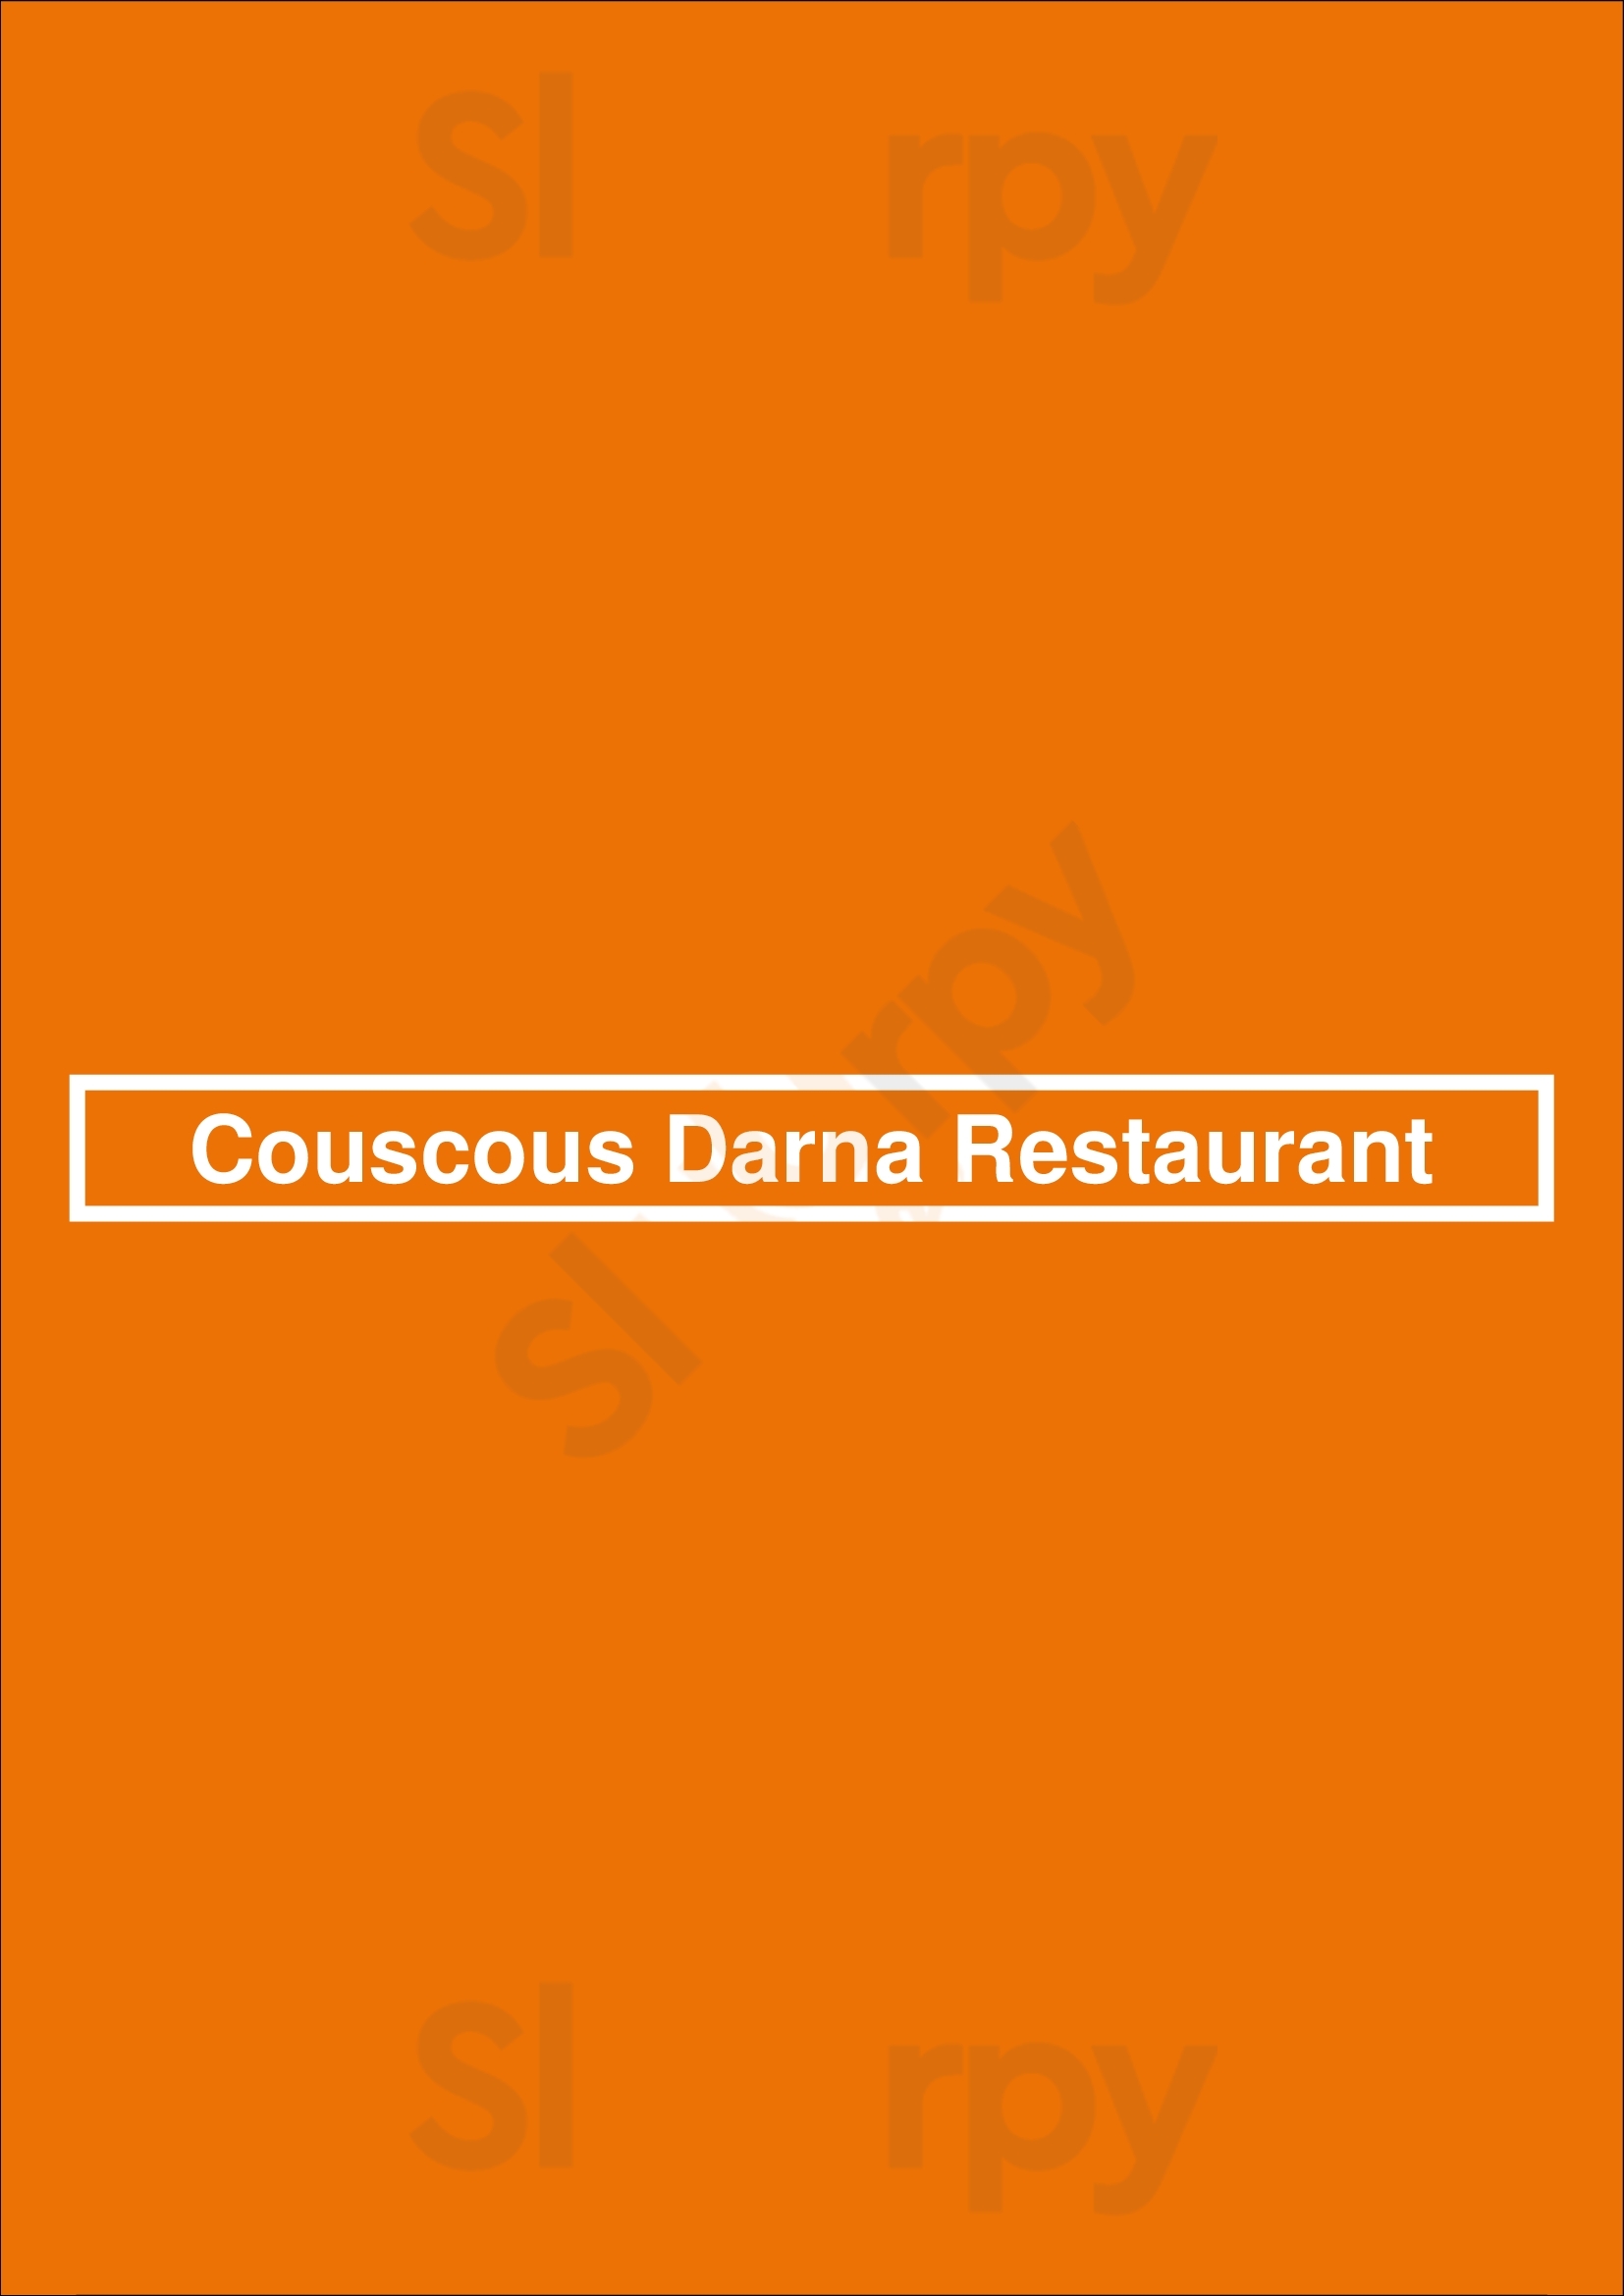 Couscous Darna Restaurant London Menu - 1